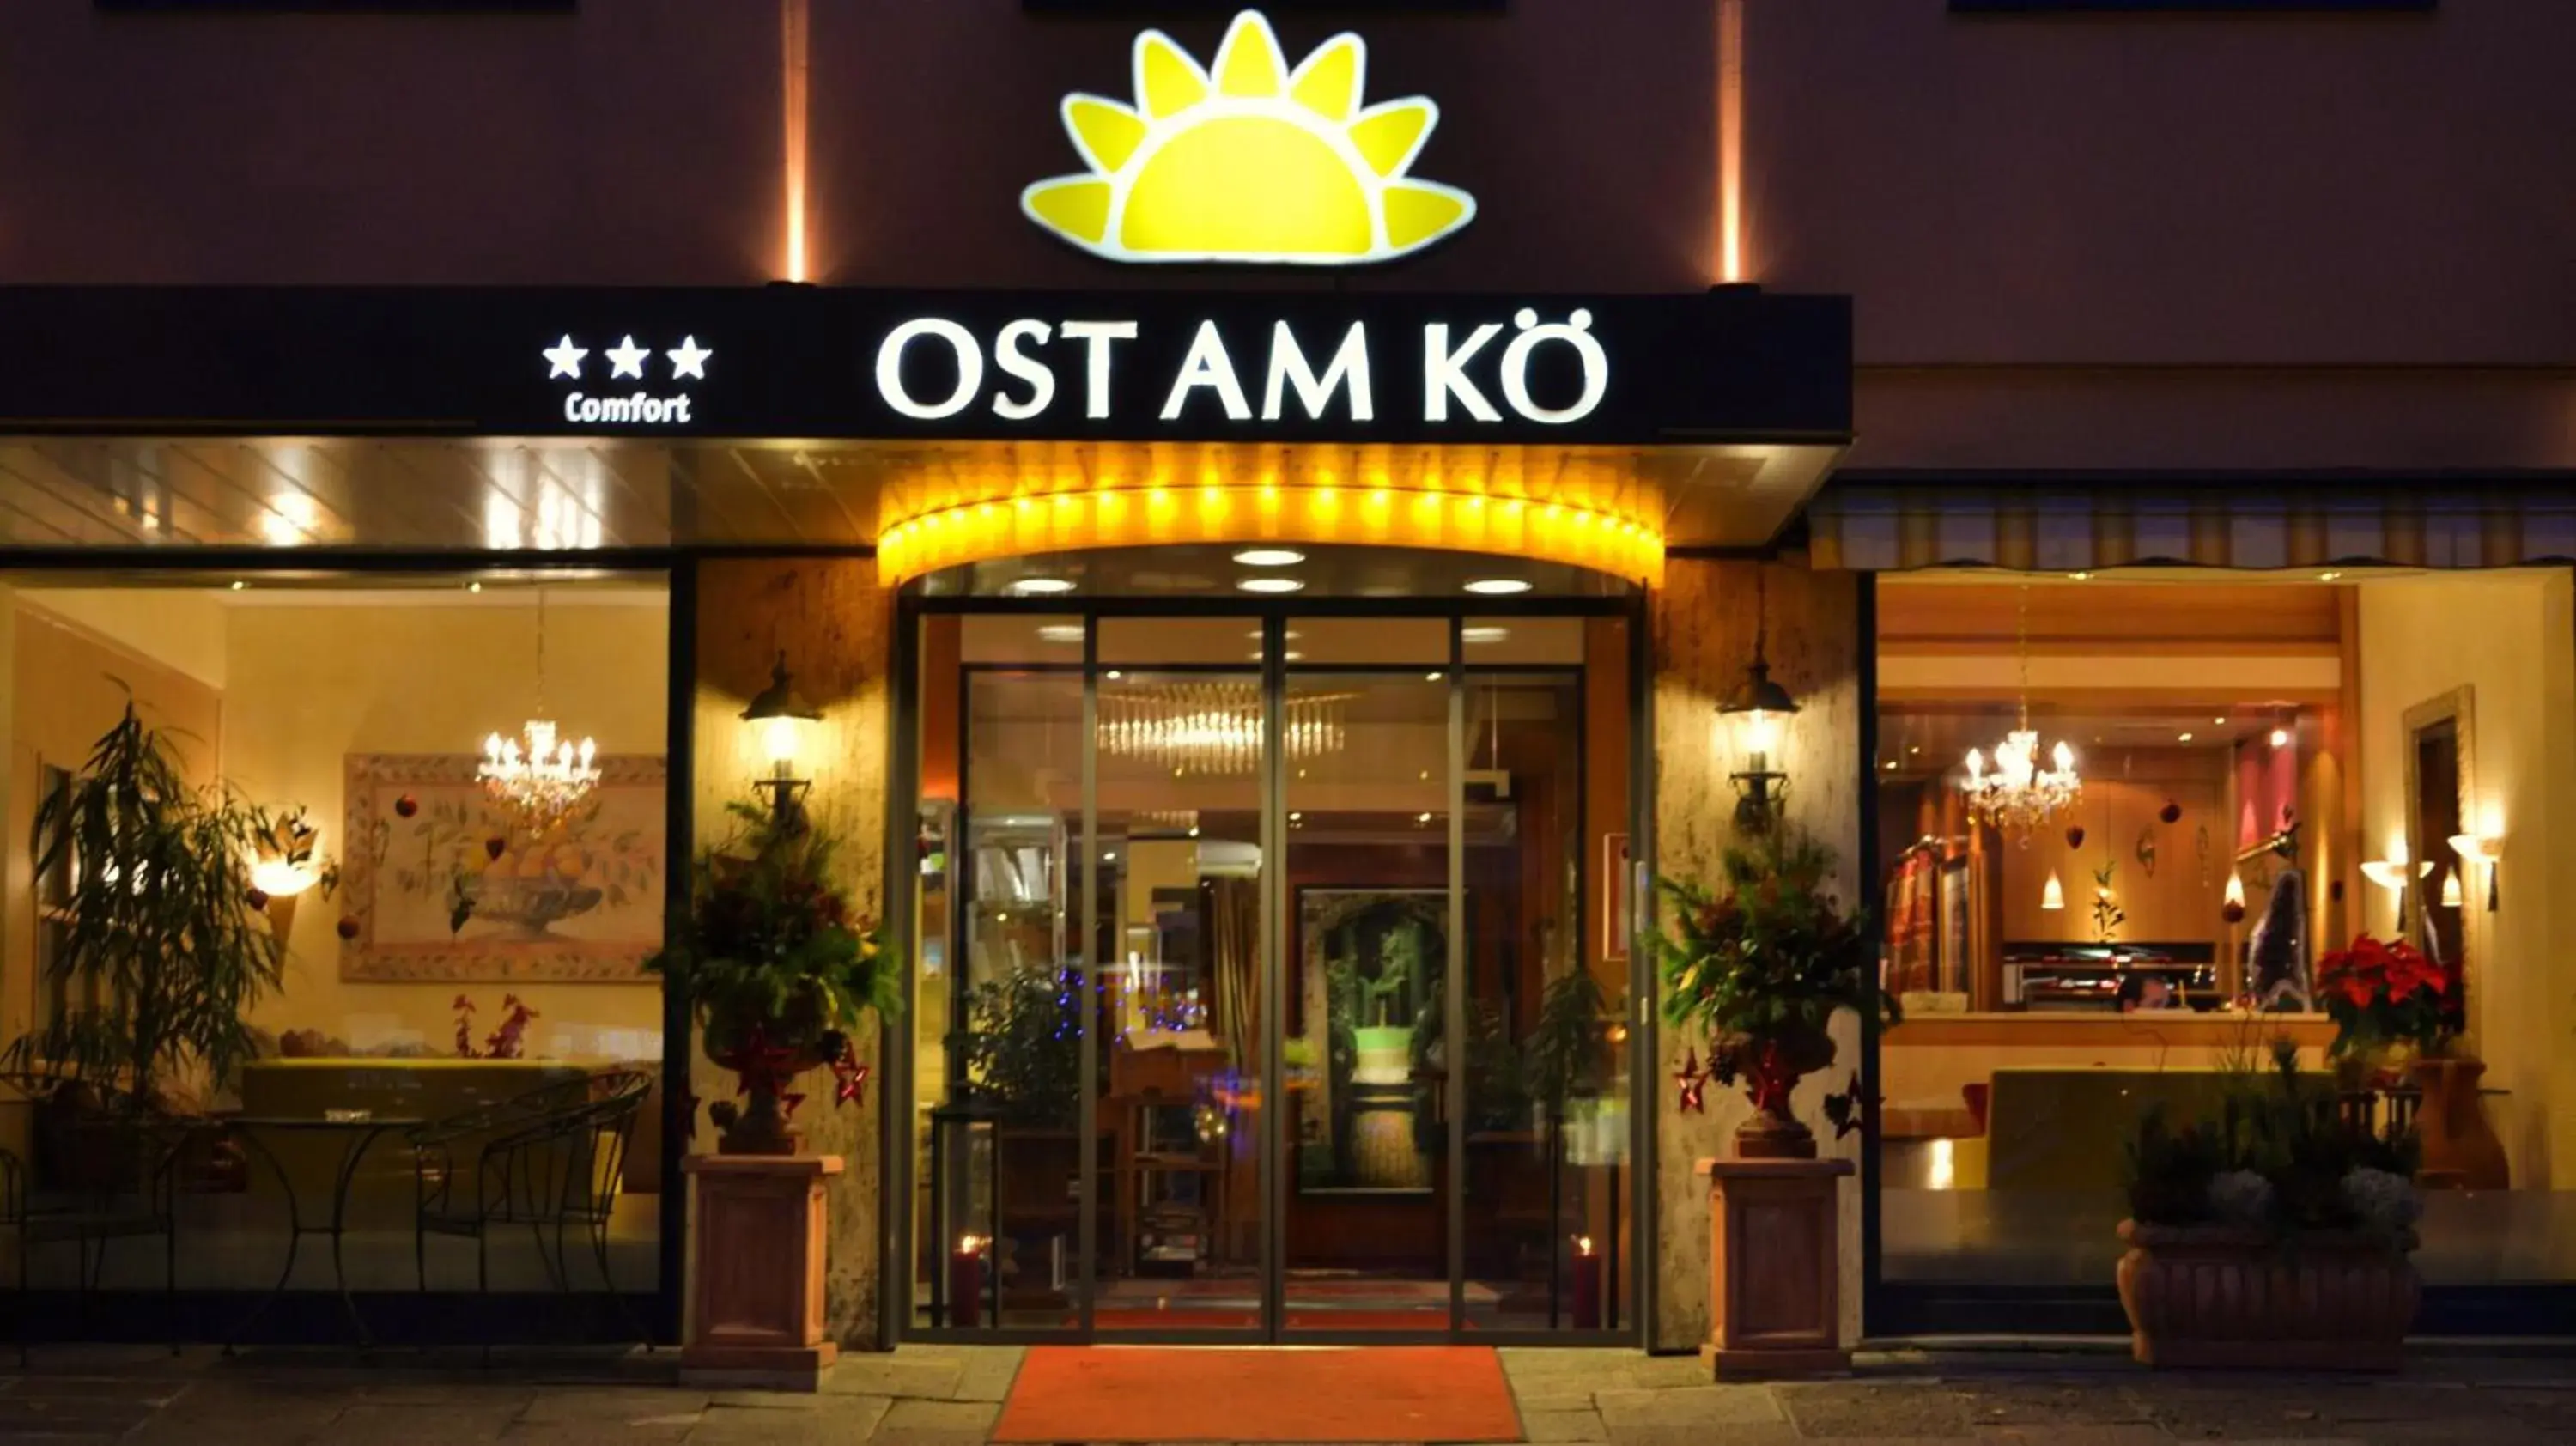 Facade/entrance in City Hotel Ost am Kö